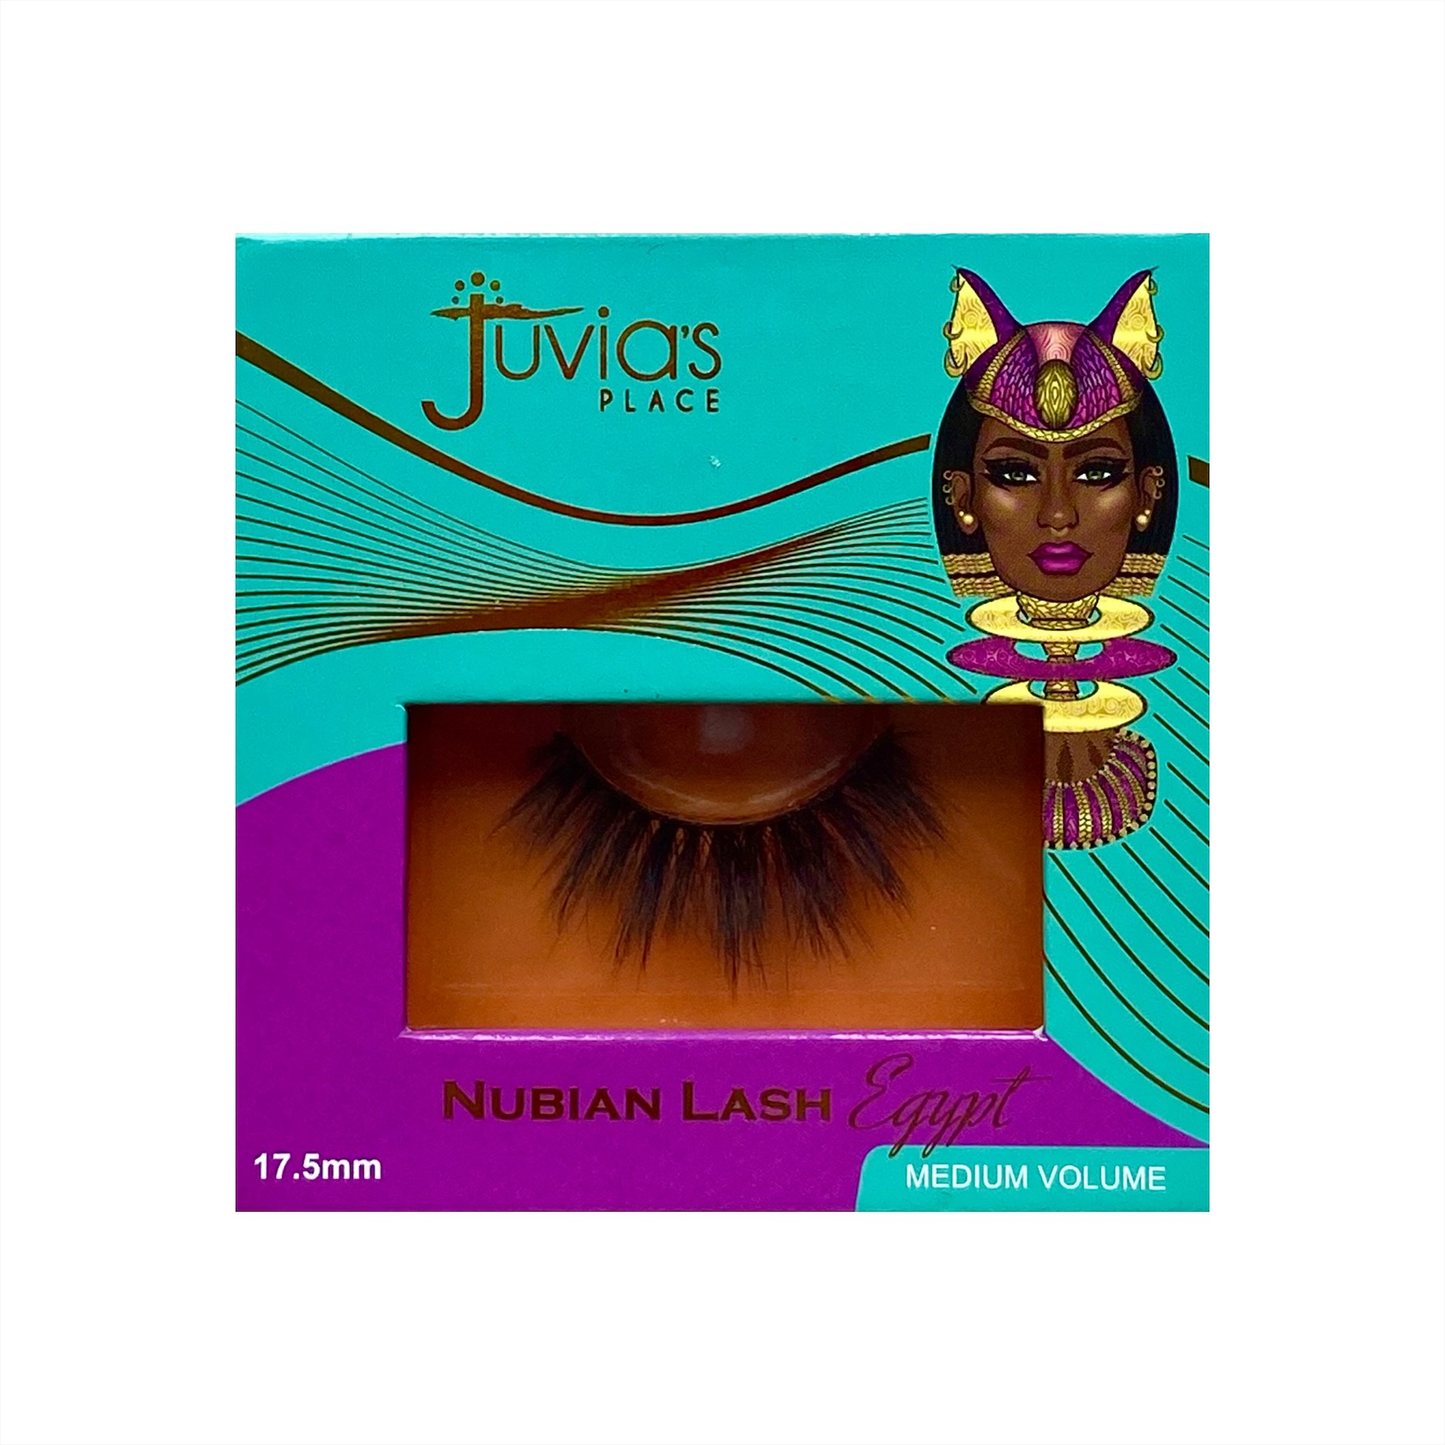 JUVIA'S PLACE The Nubian Lashes - Egypt